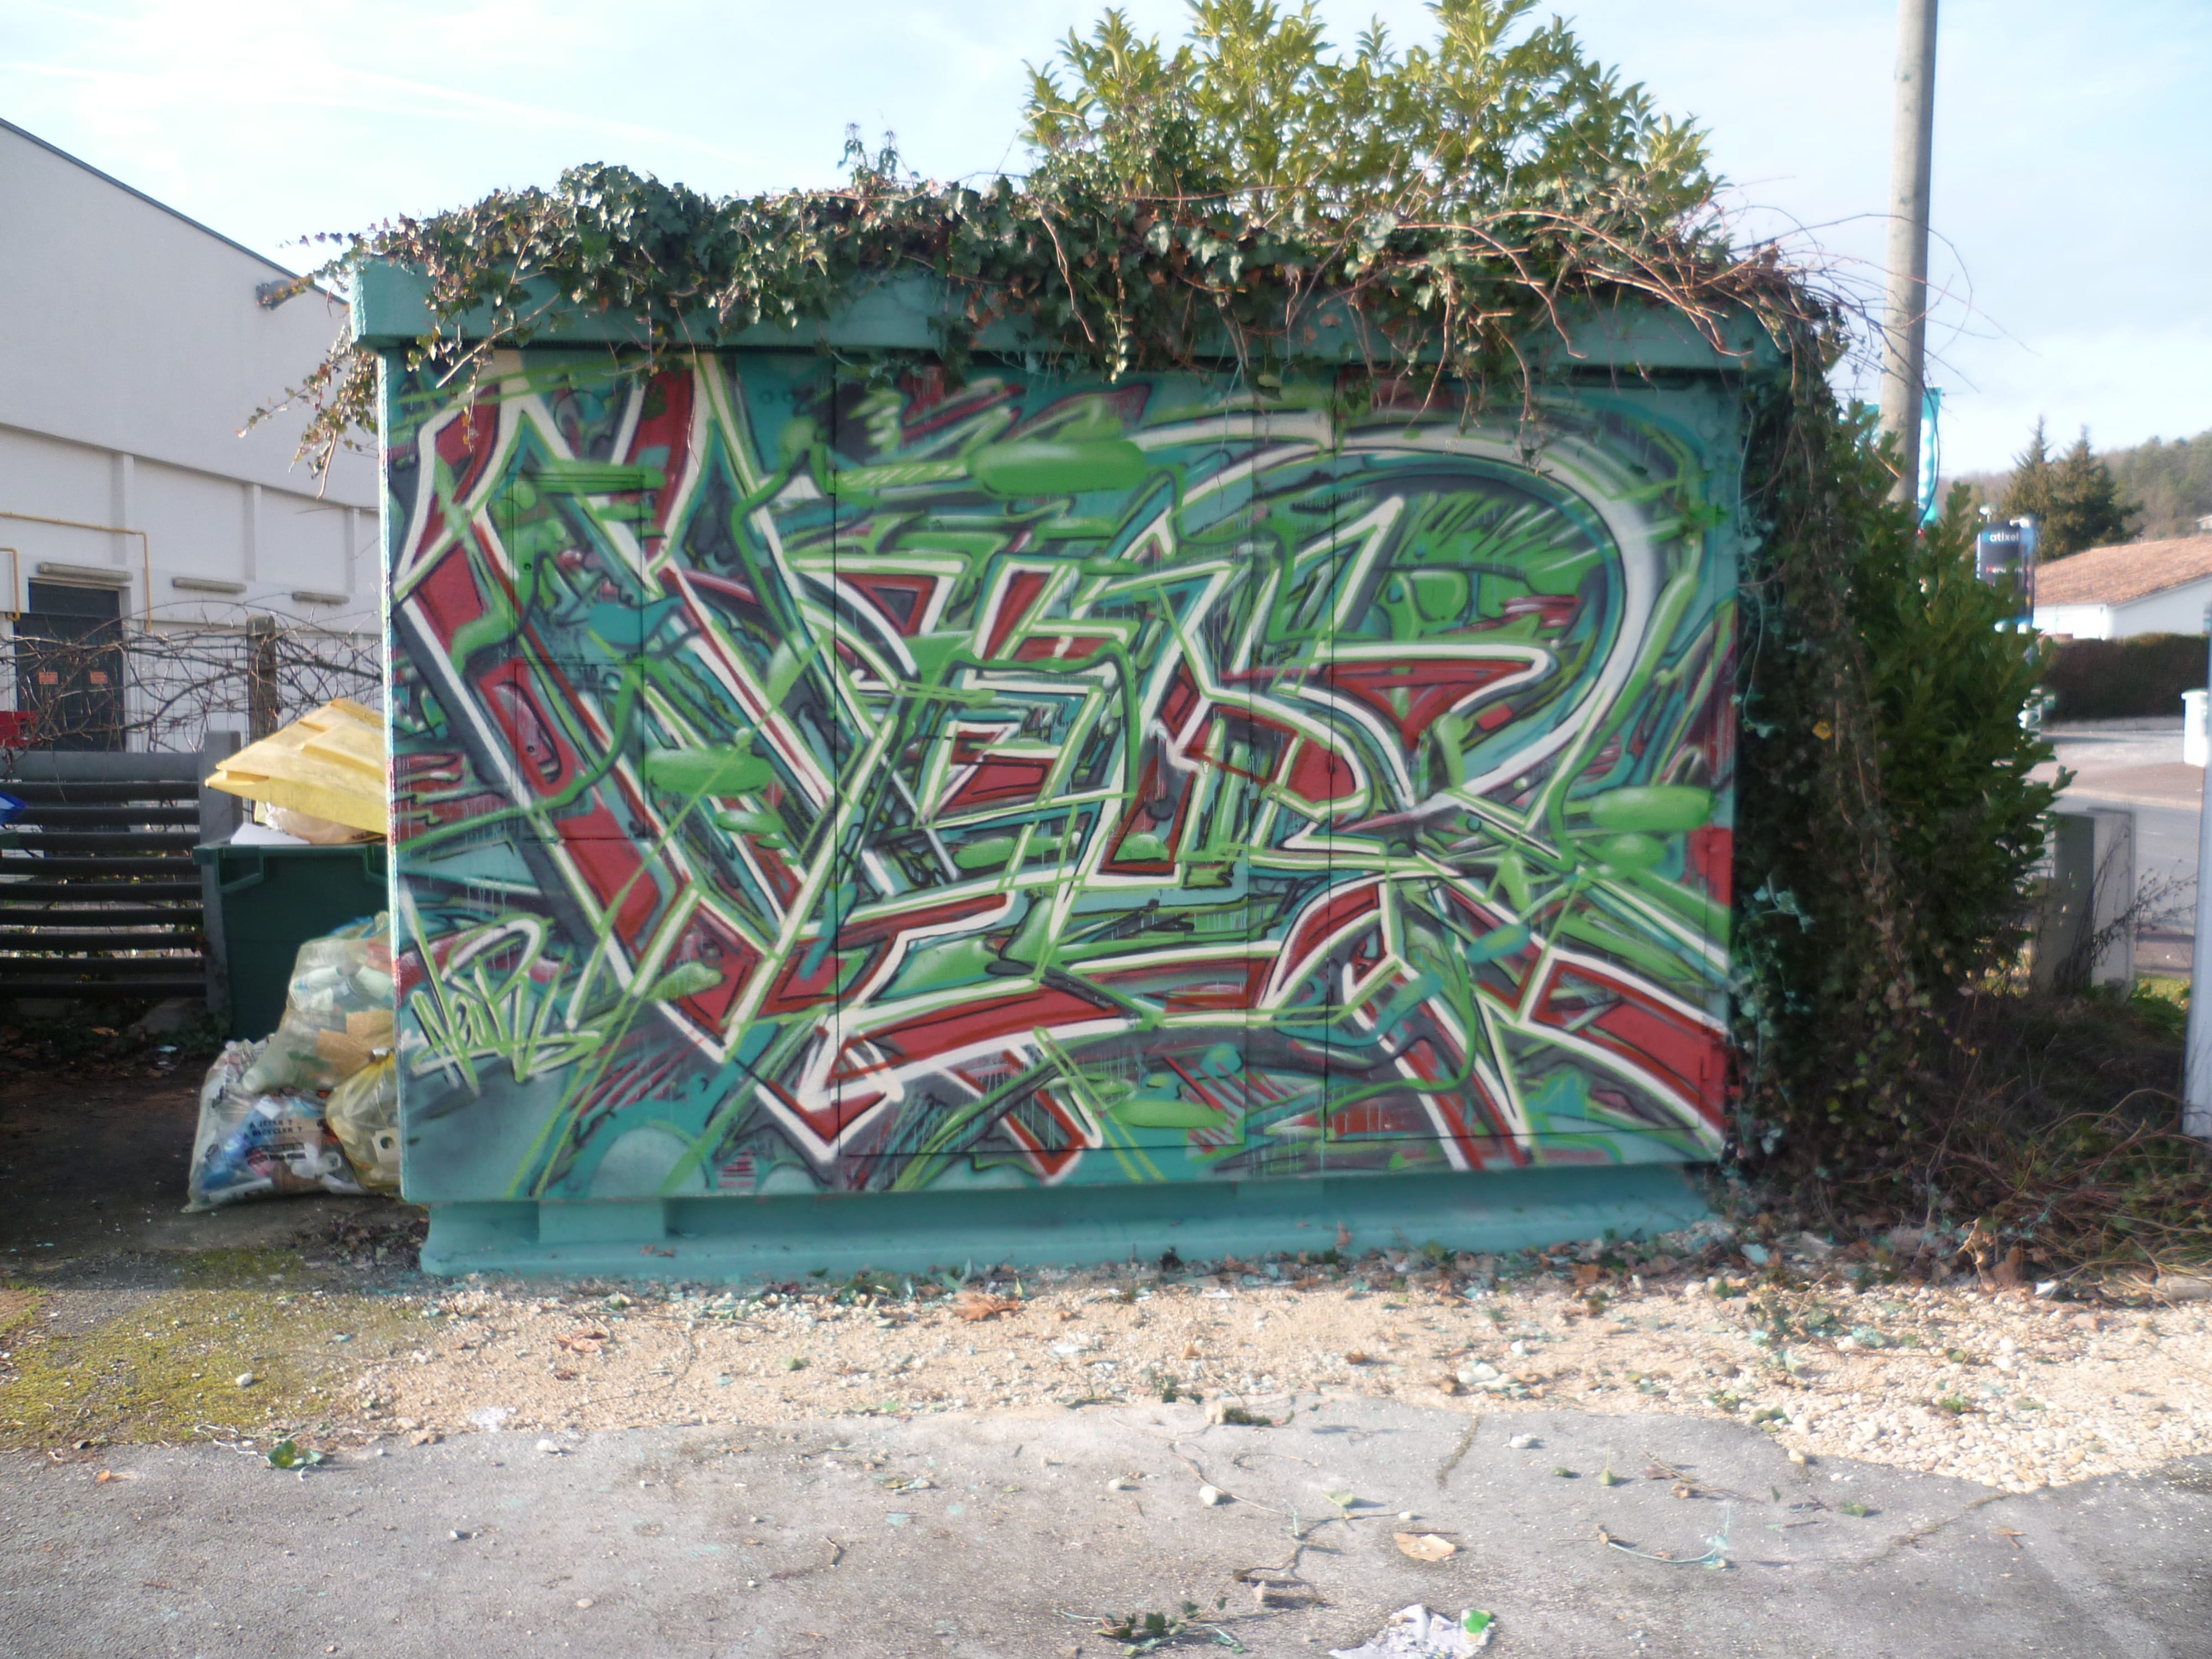 Graffiti 5656 #neurabf captured by Neur Abf in Trélissac France